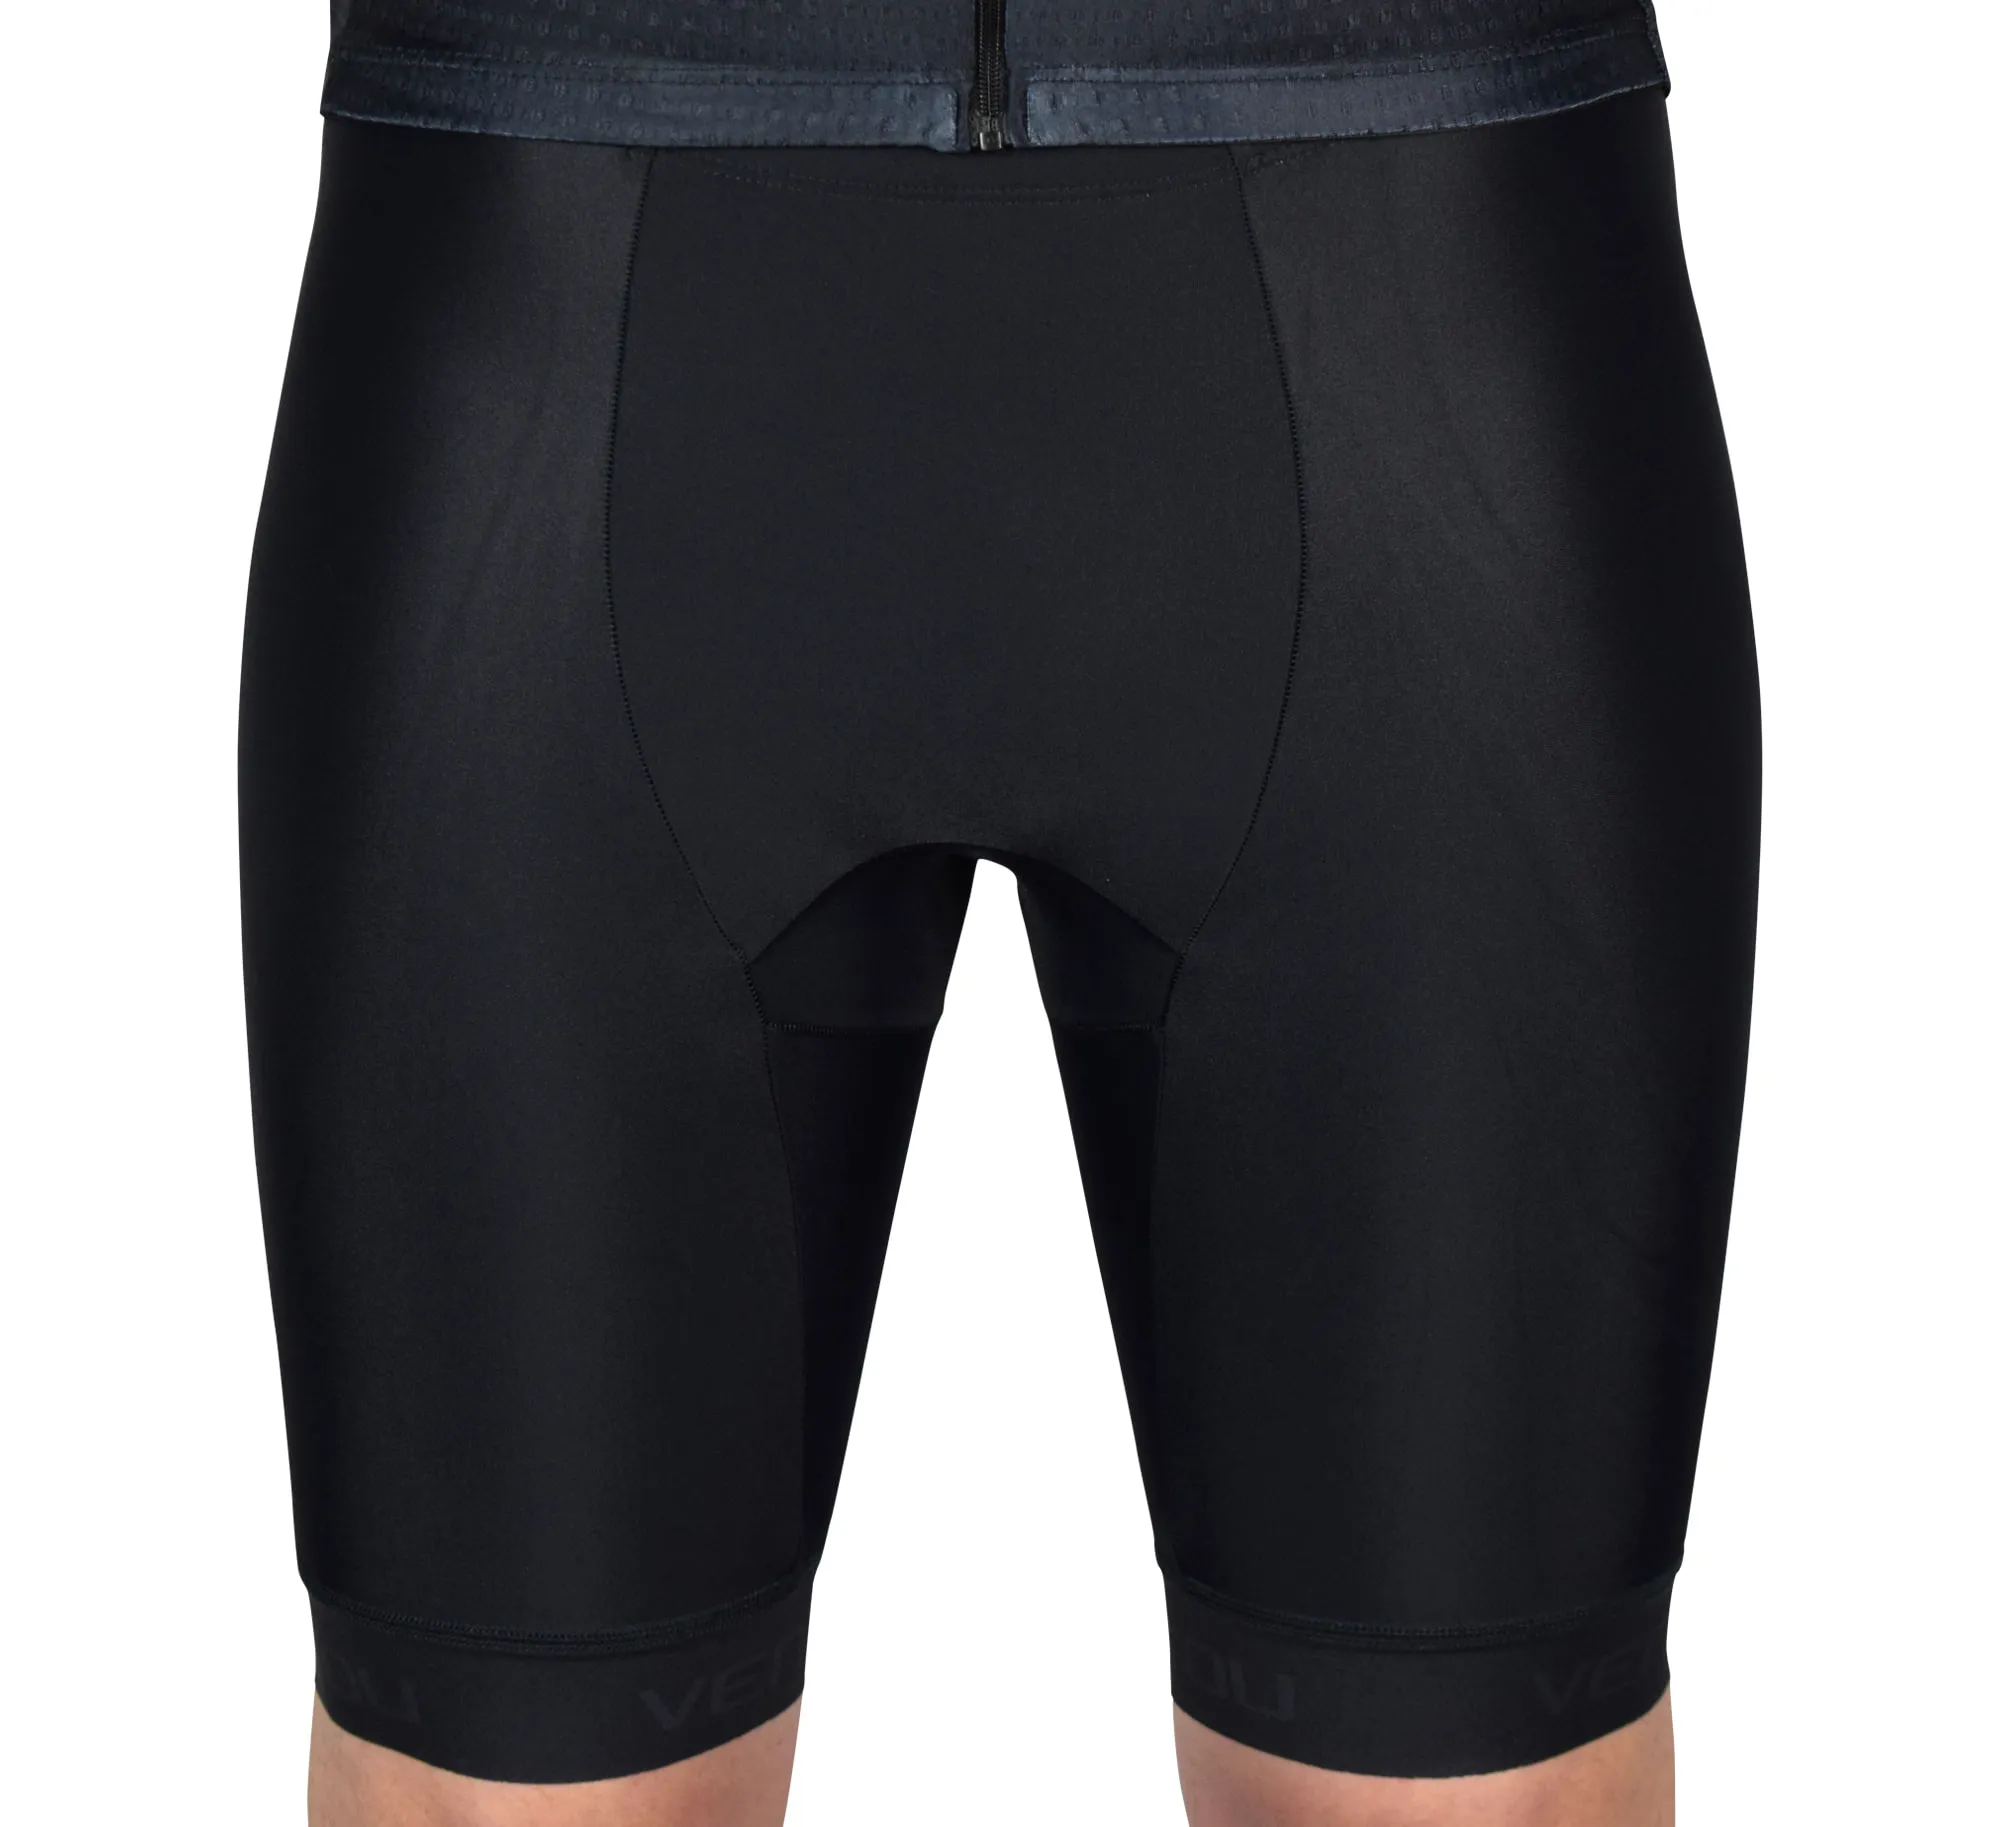 Black Tri Shorts Front 2